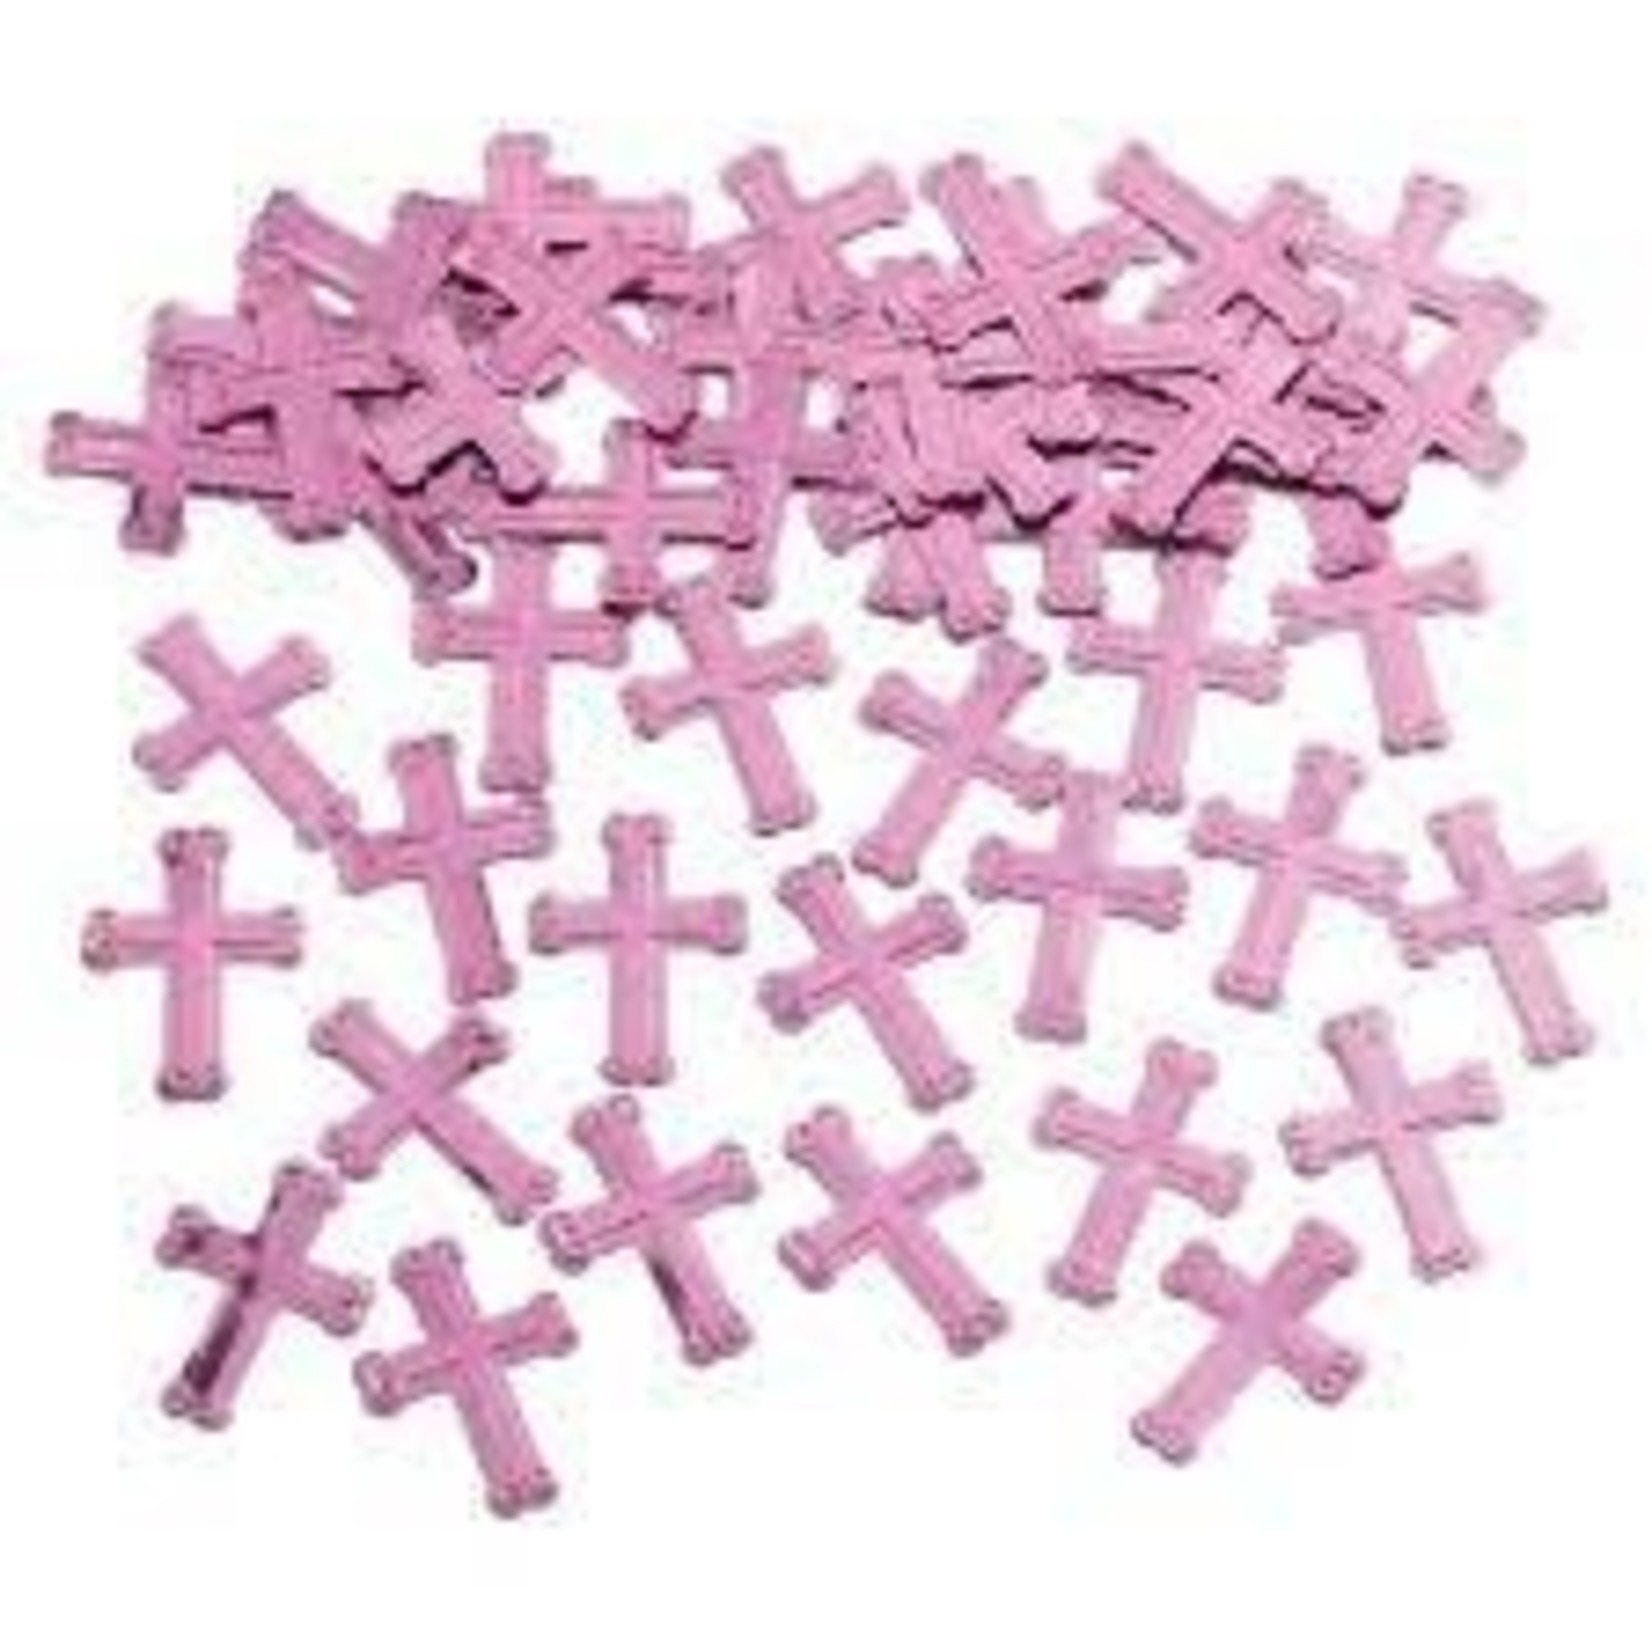 Embossed Pink Cross Confetti